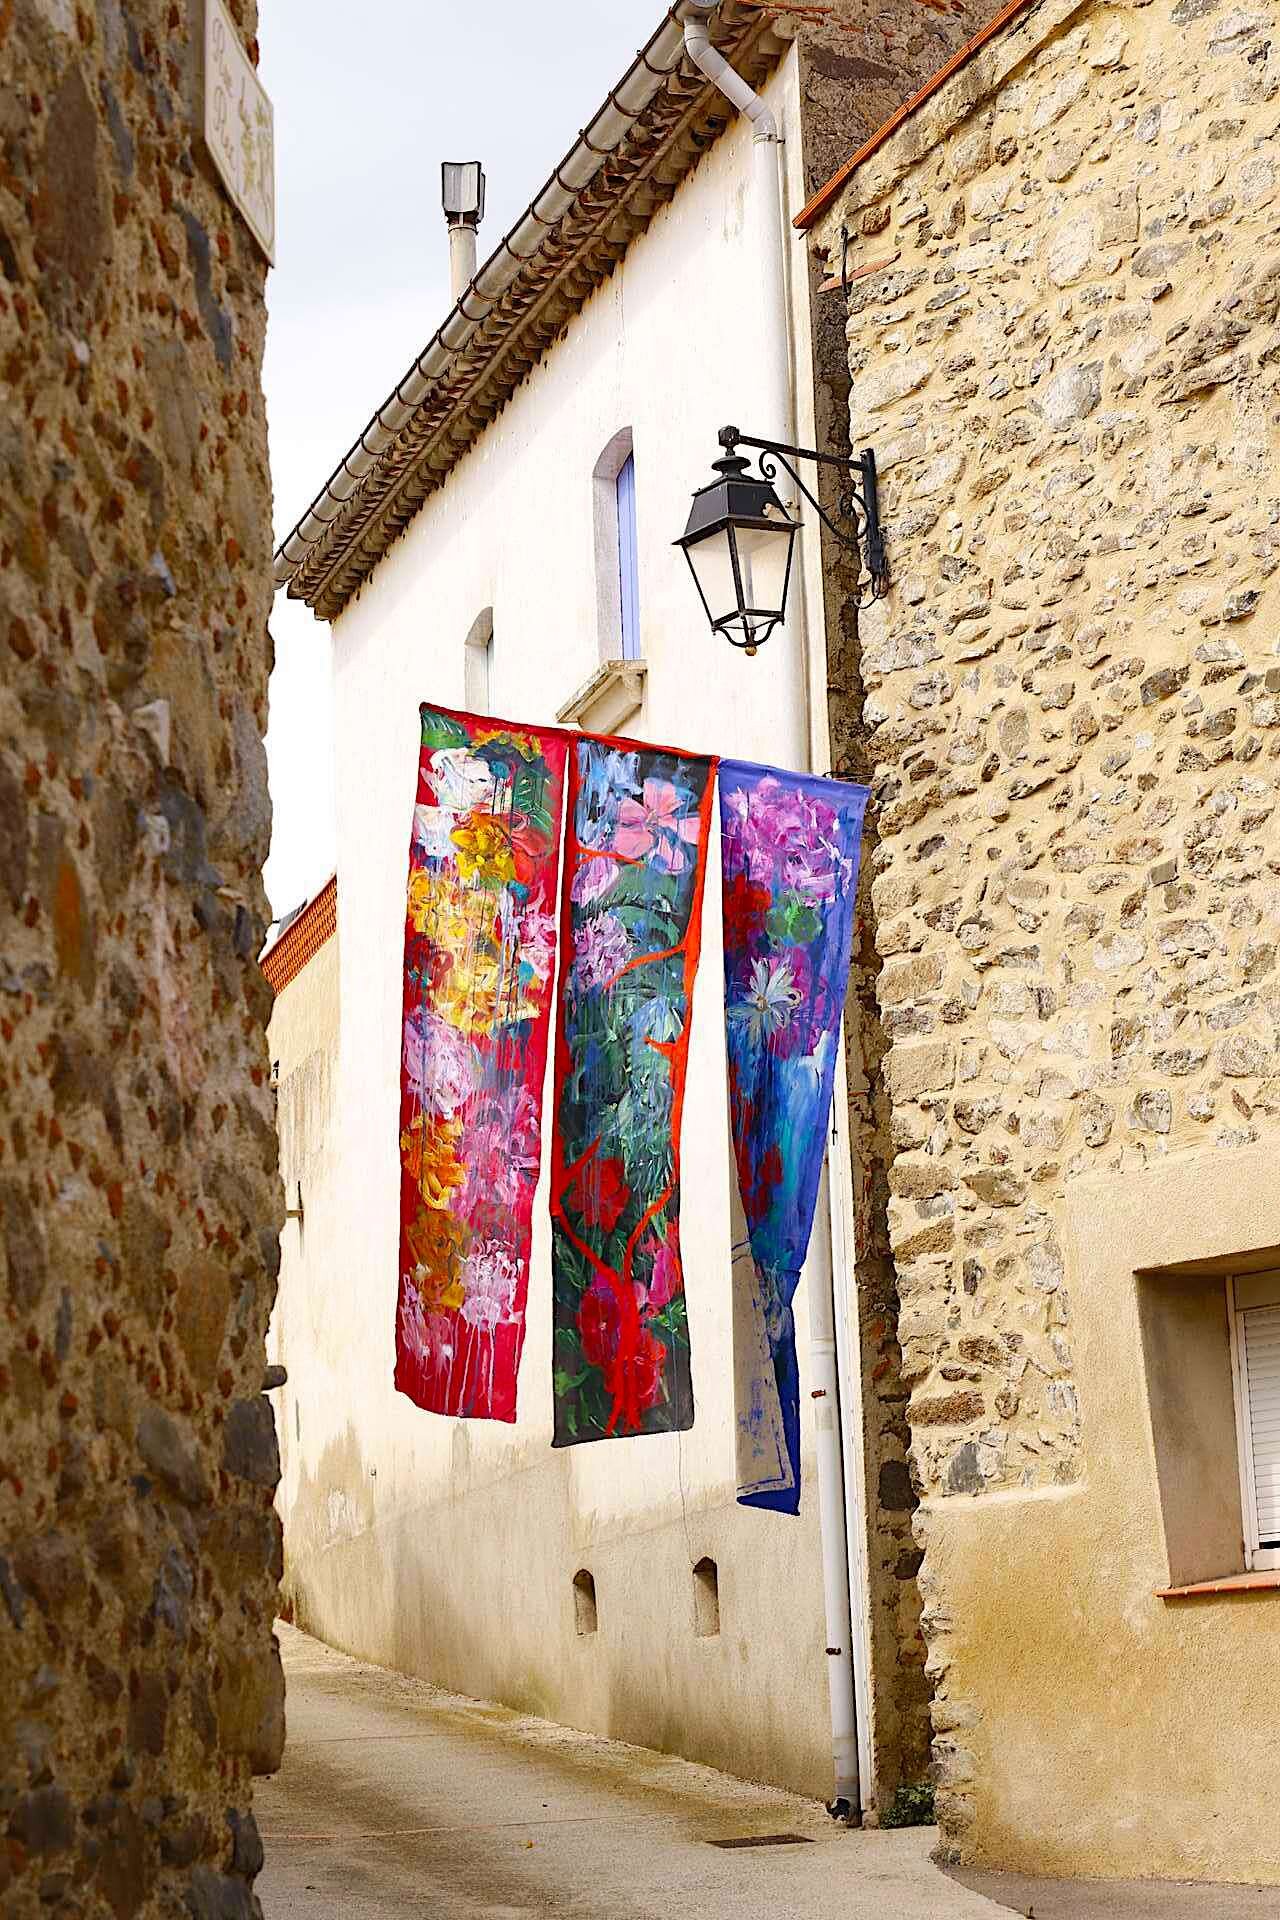 L'art floral d'Yvon Saillard embellie le village